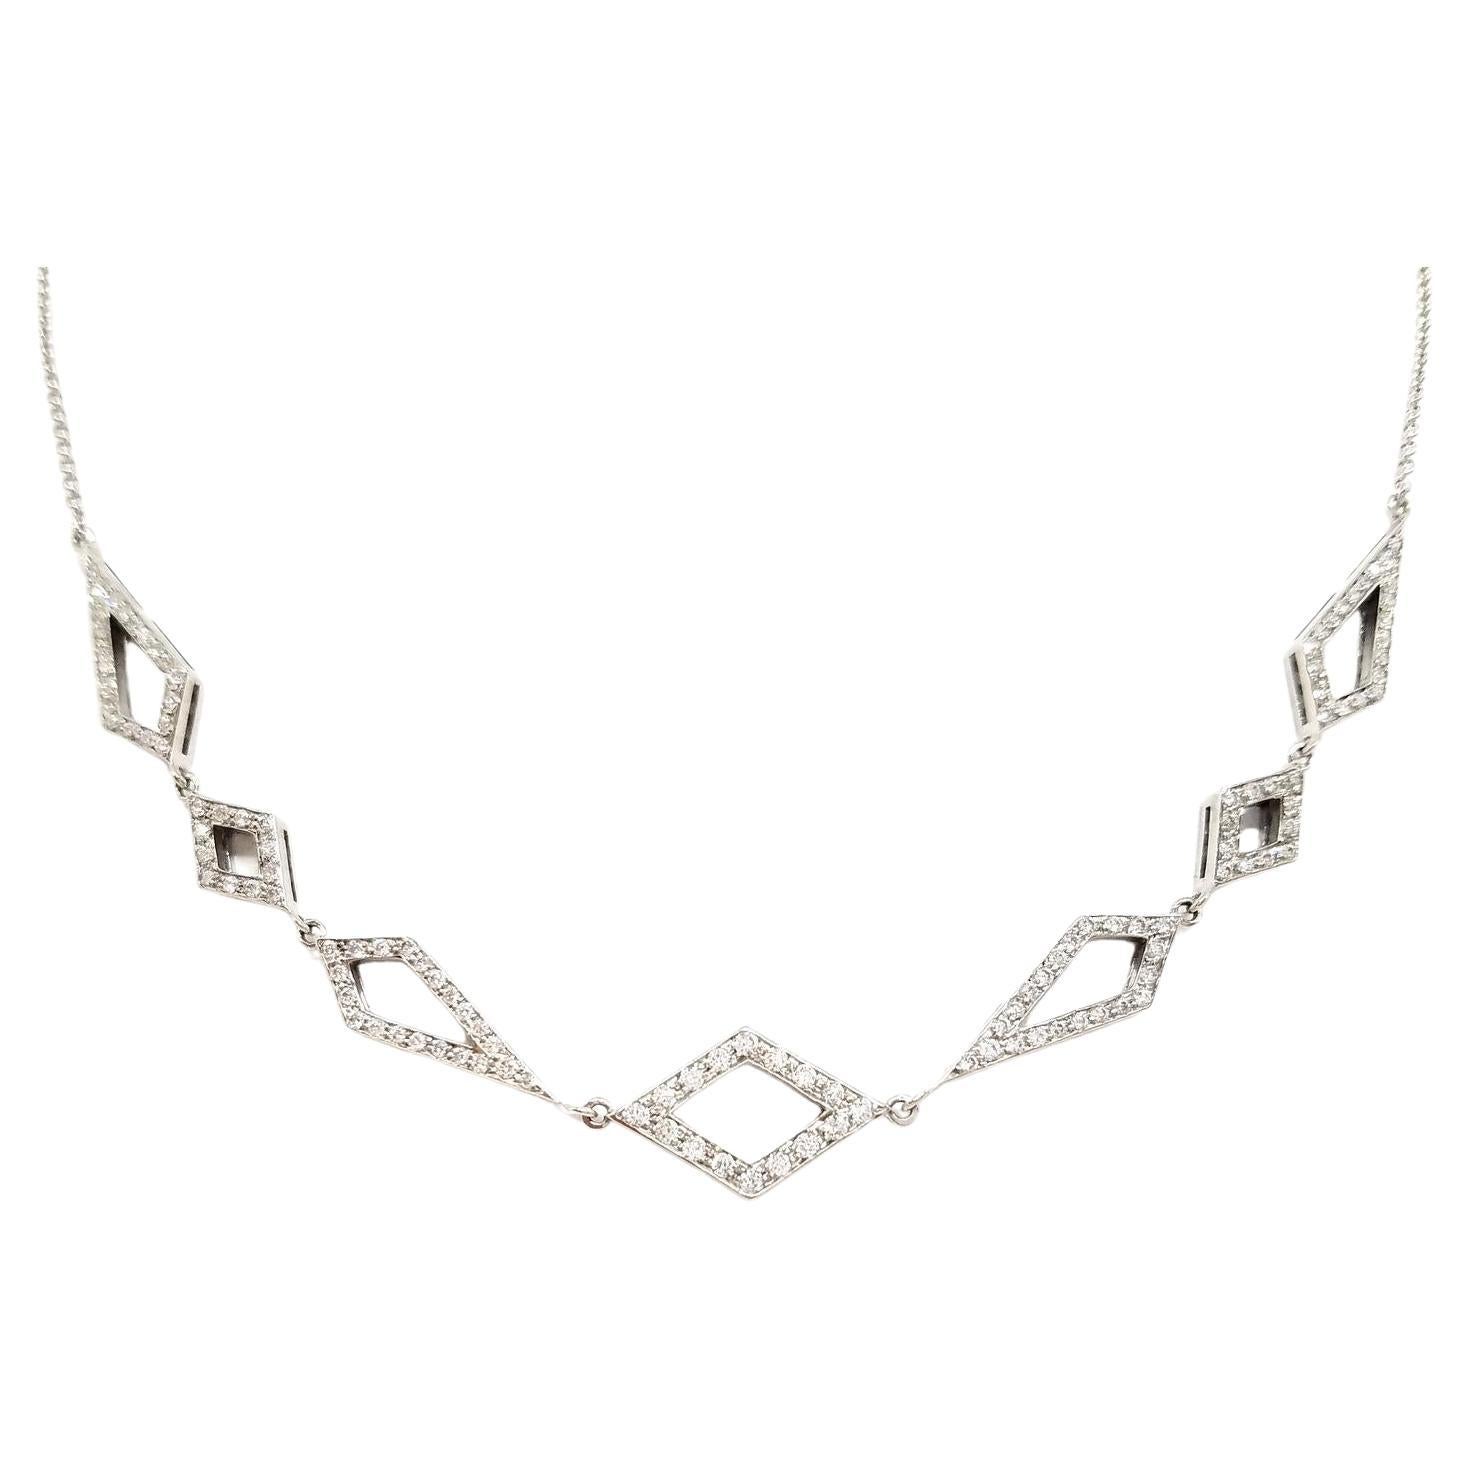 Chain Necklace White GoldDiamond